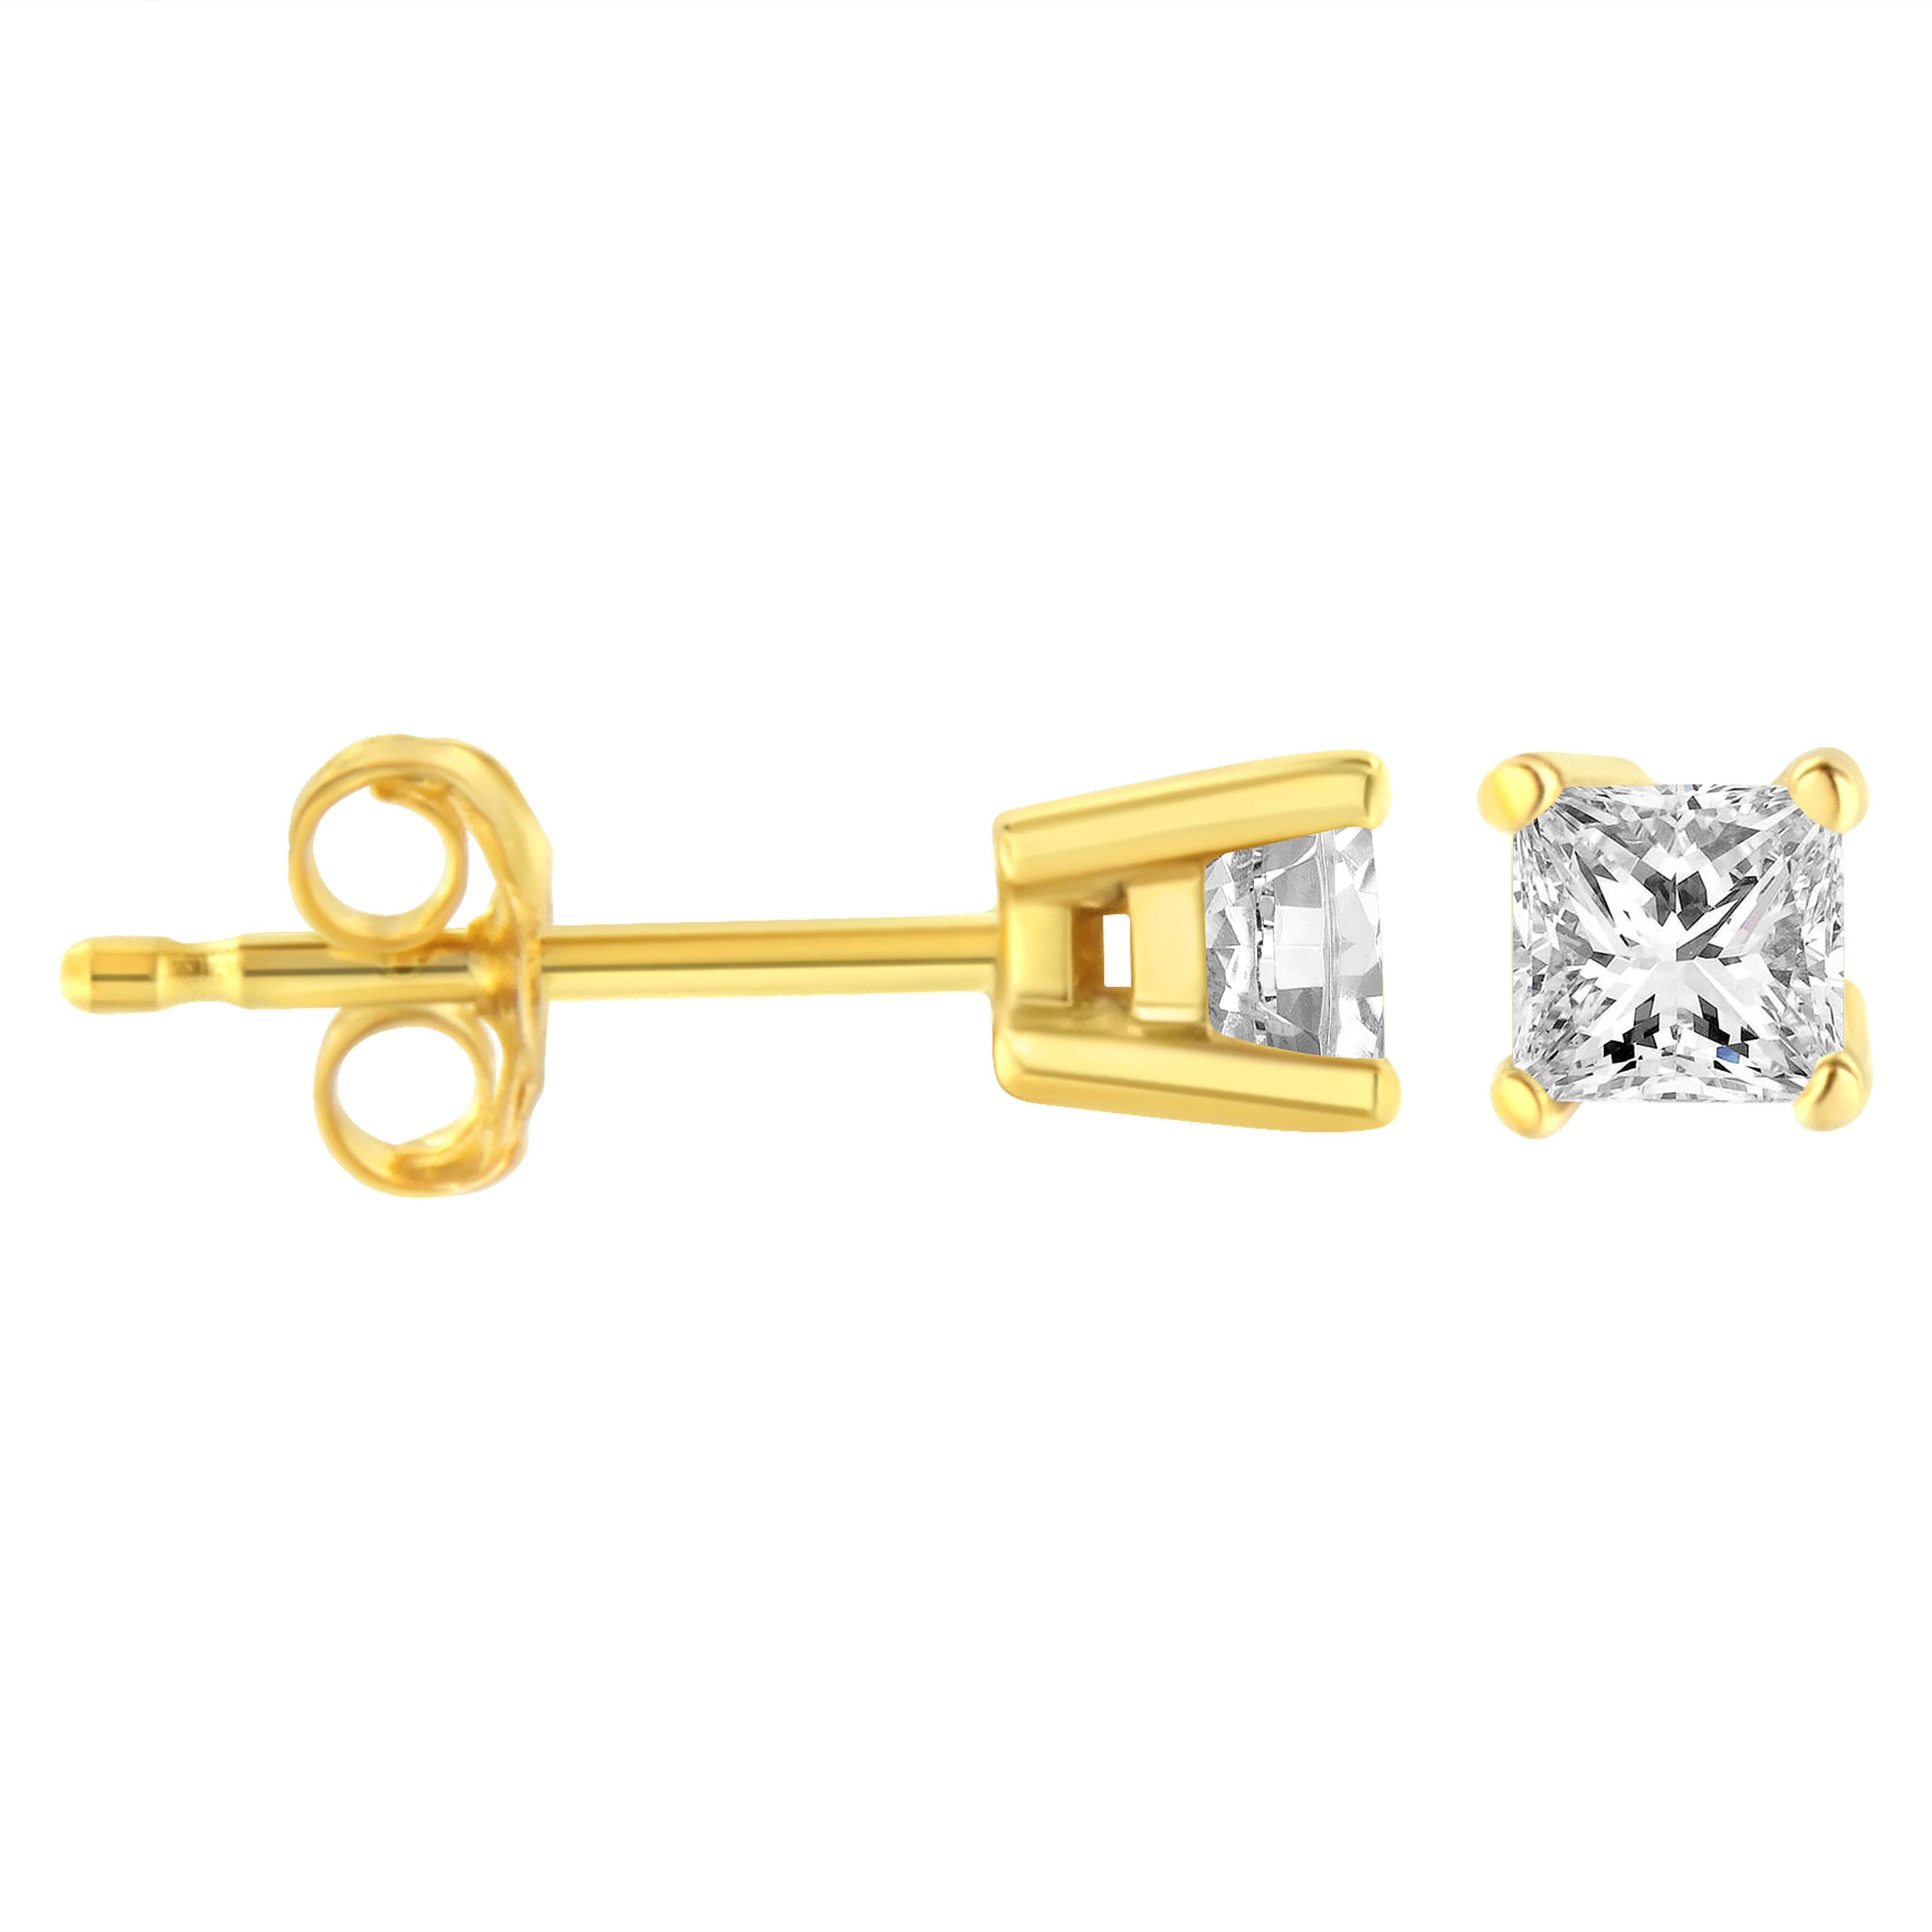 Modern AGS Certified 14K Yellow Gold 1/4 cttw Princess-Cut Solitaire Diamond Earrings